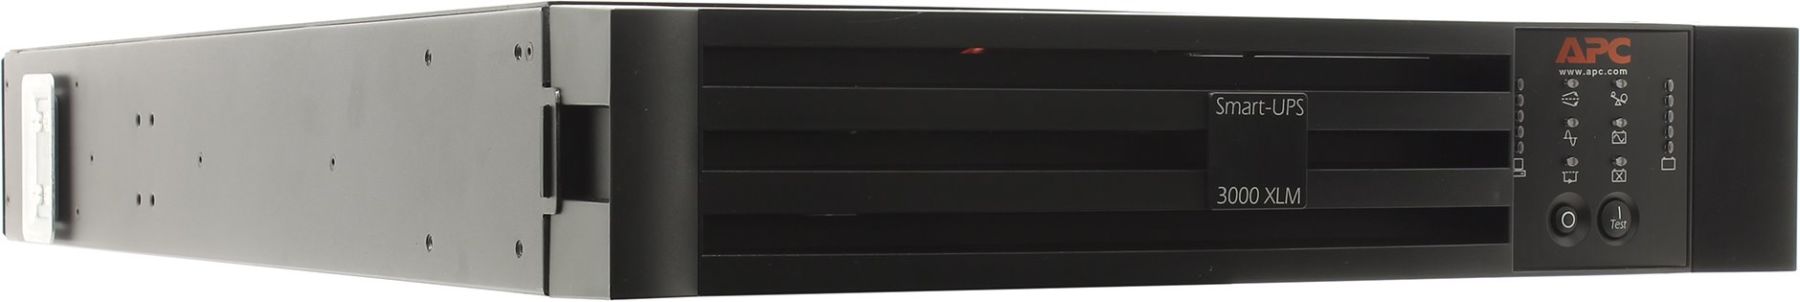 ИБП APC Smart-UPS XL, 3000VA/2850W, 230V, DB-9 RS-232, RJ-45 10/100 Base-T, USB, Extended runtimel, Rack Height 2U, Black